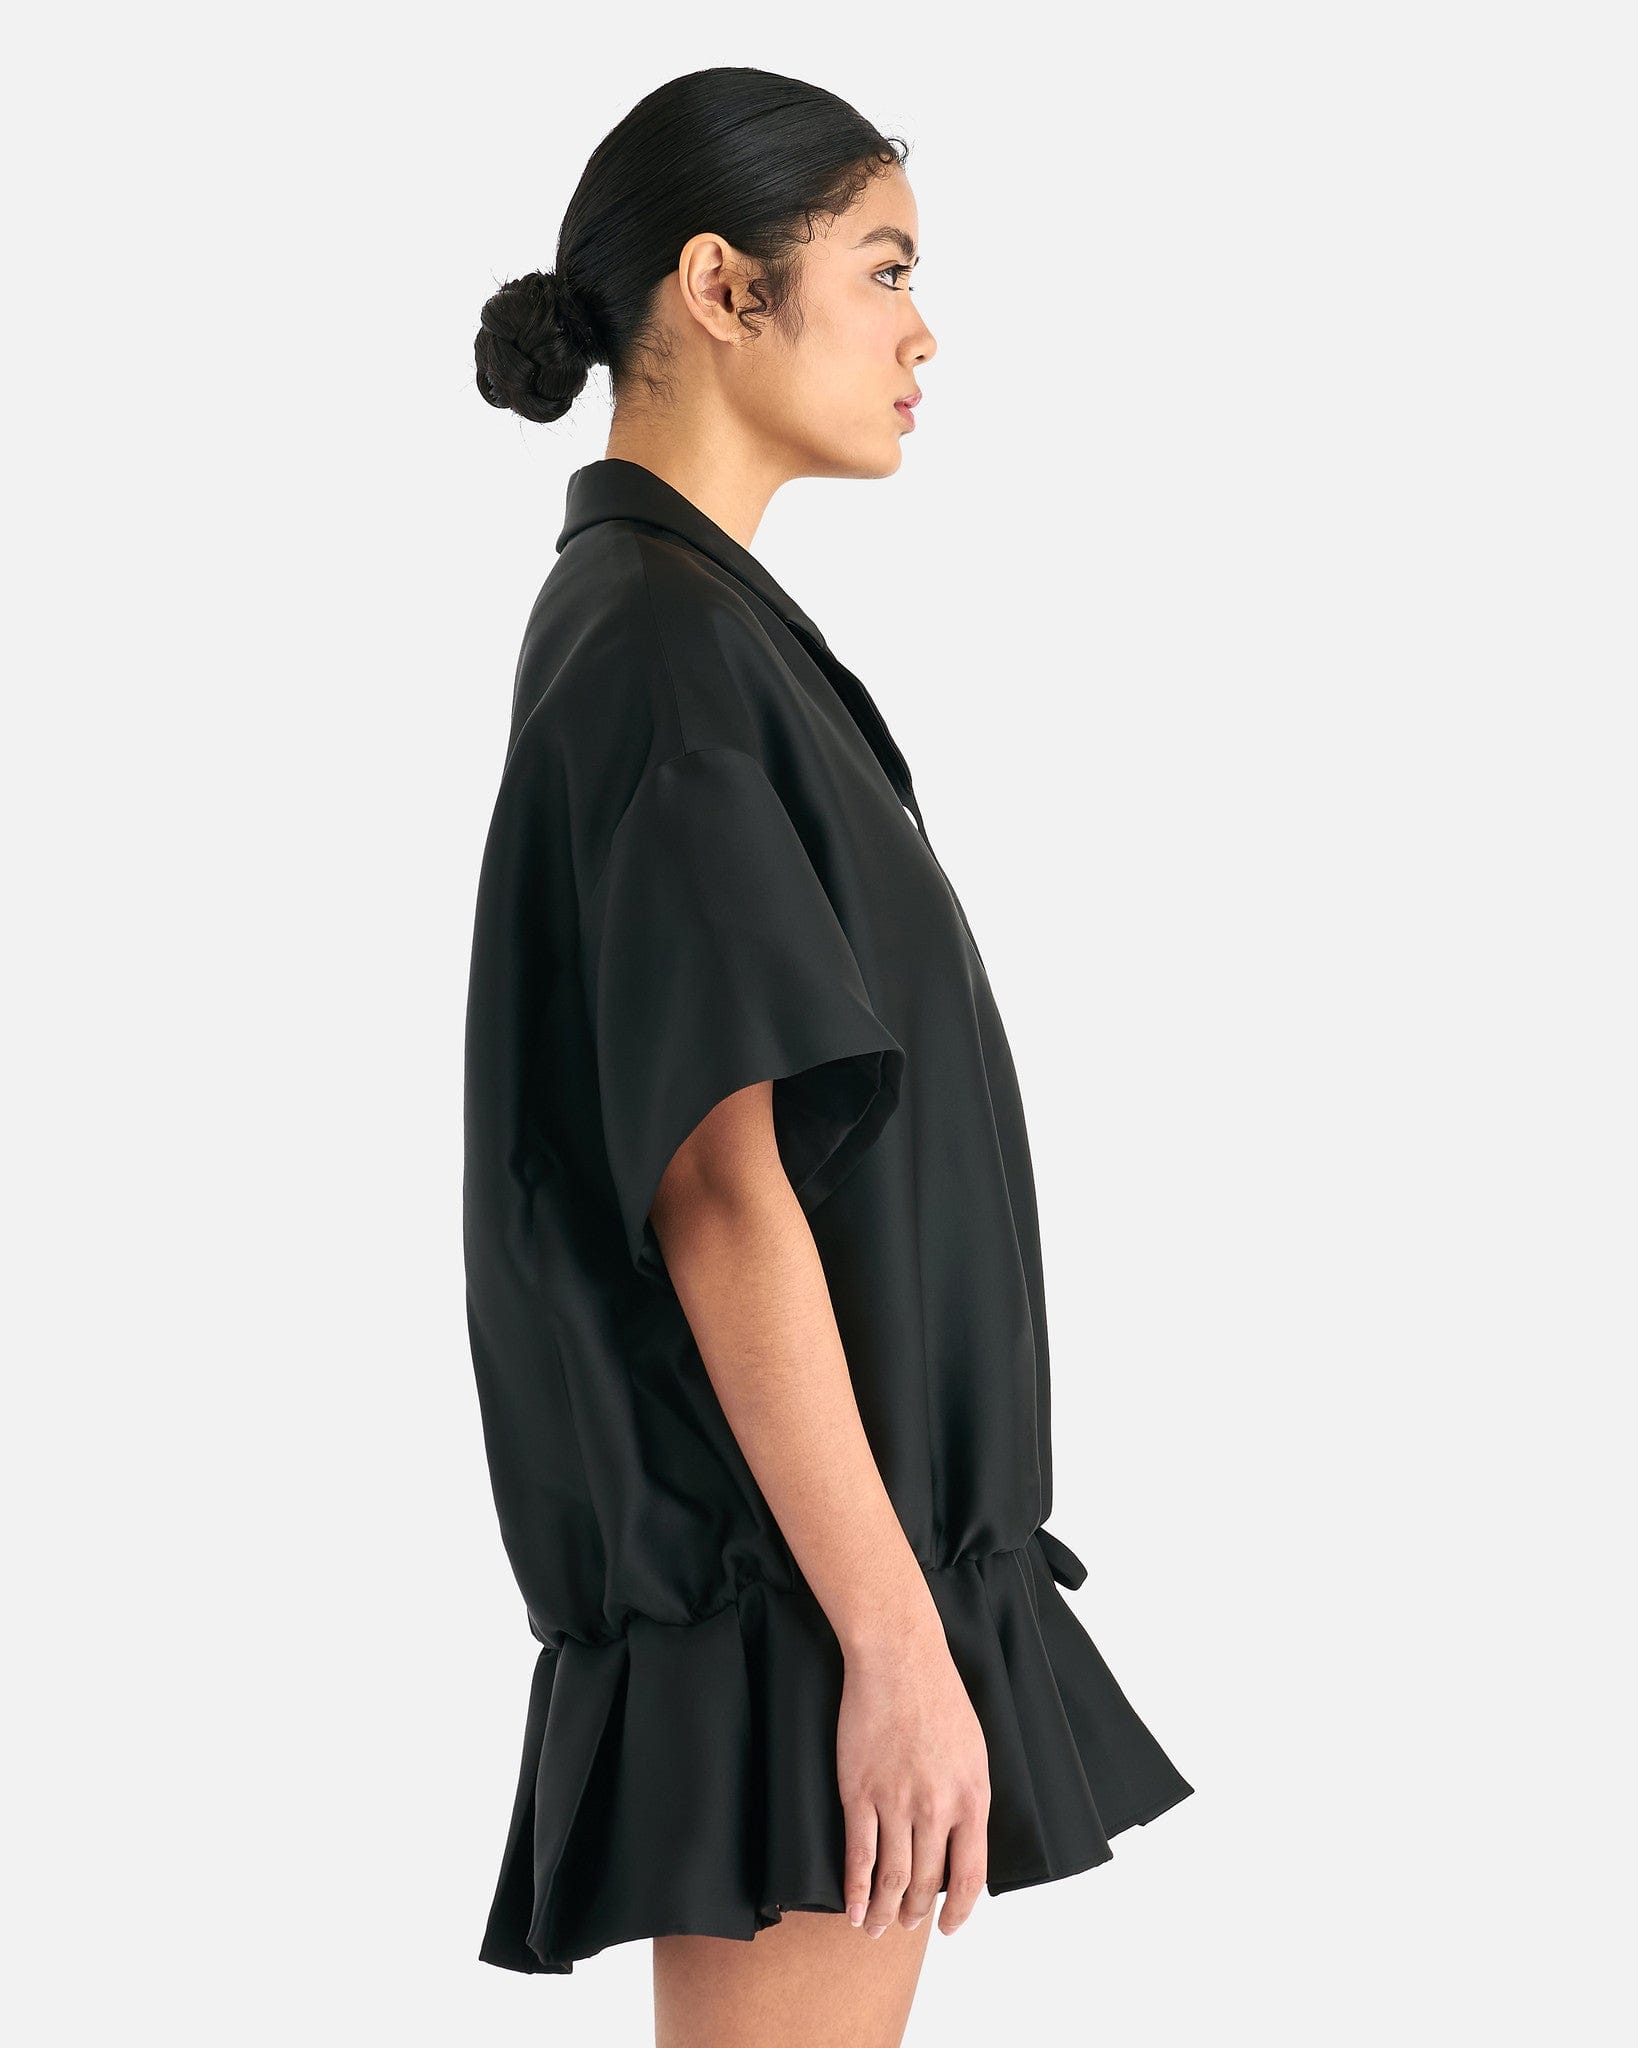 ShuShu/Tong Women Dresses Short Sleeved Hoodie Dress in Black